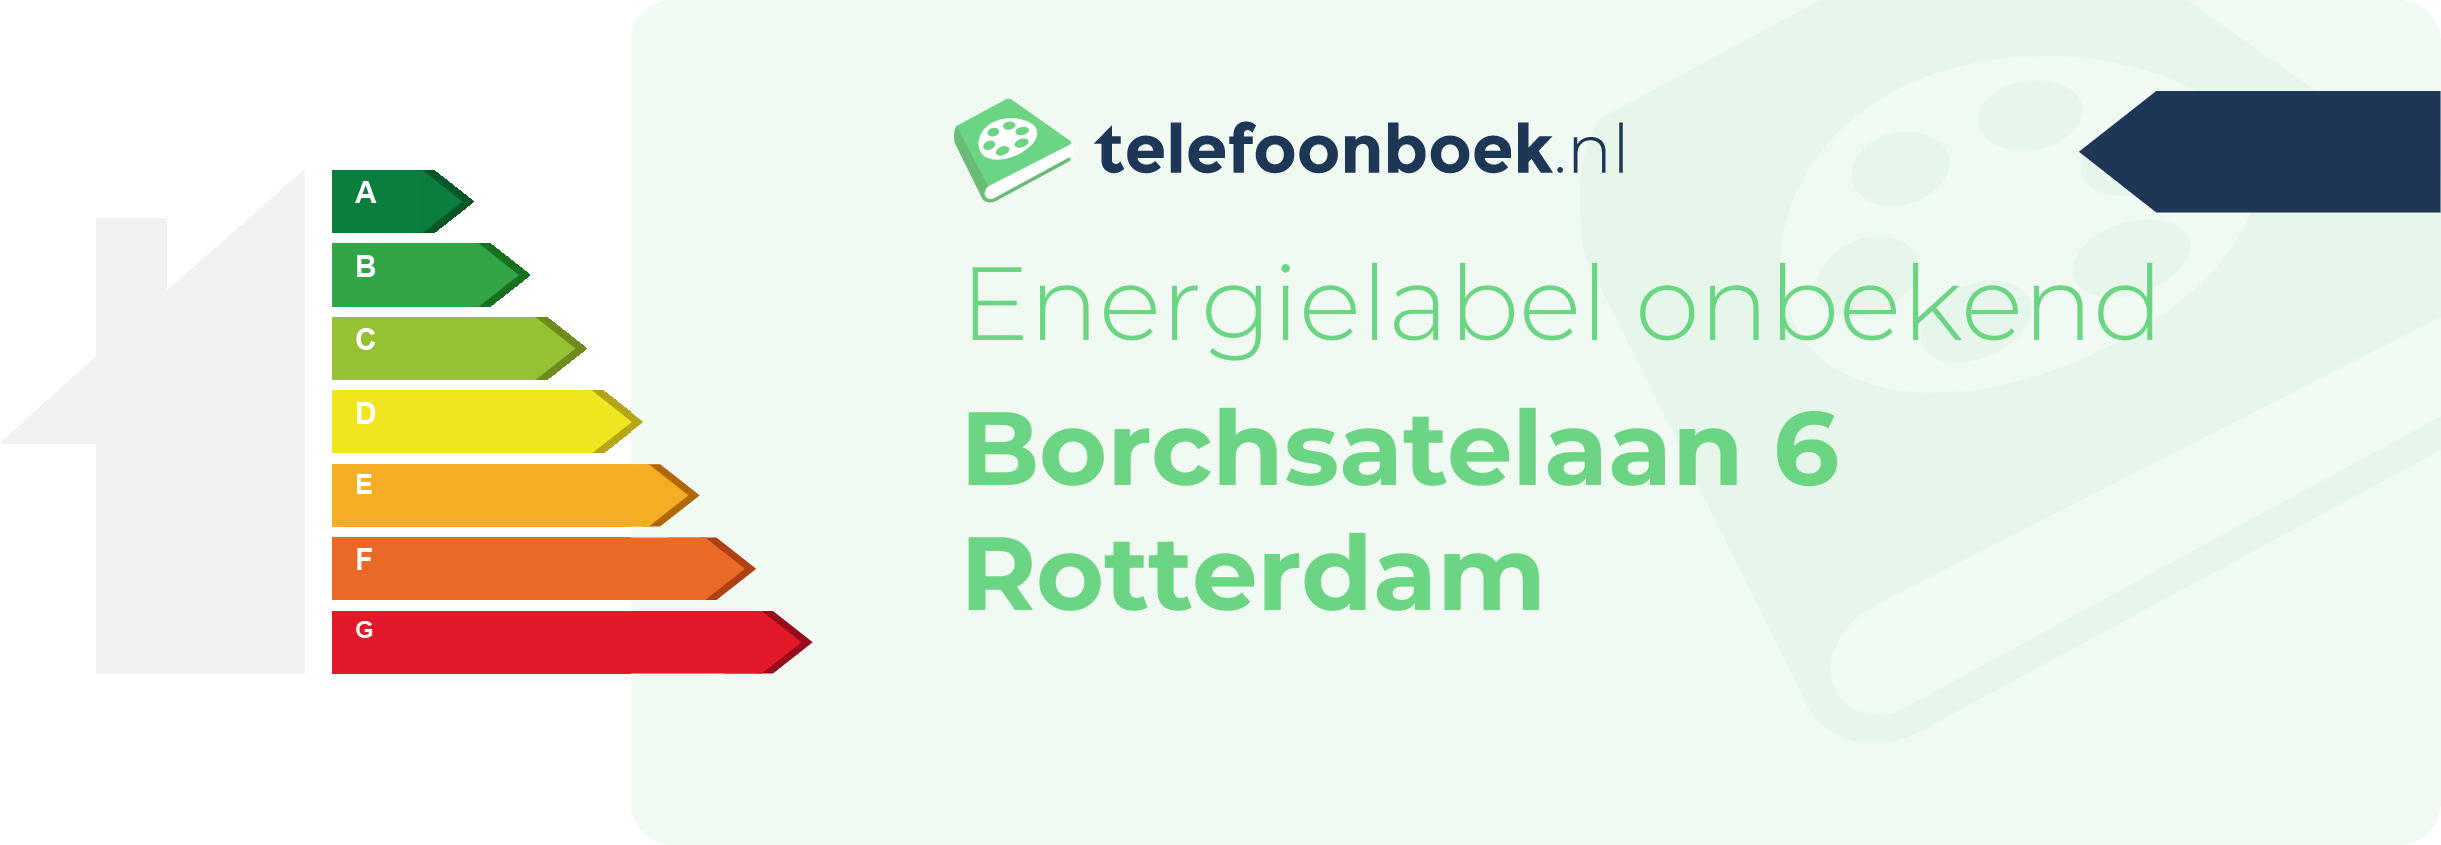 Energielabel Borchsatelaan 6 Rotterdam